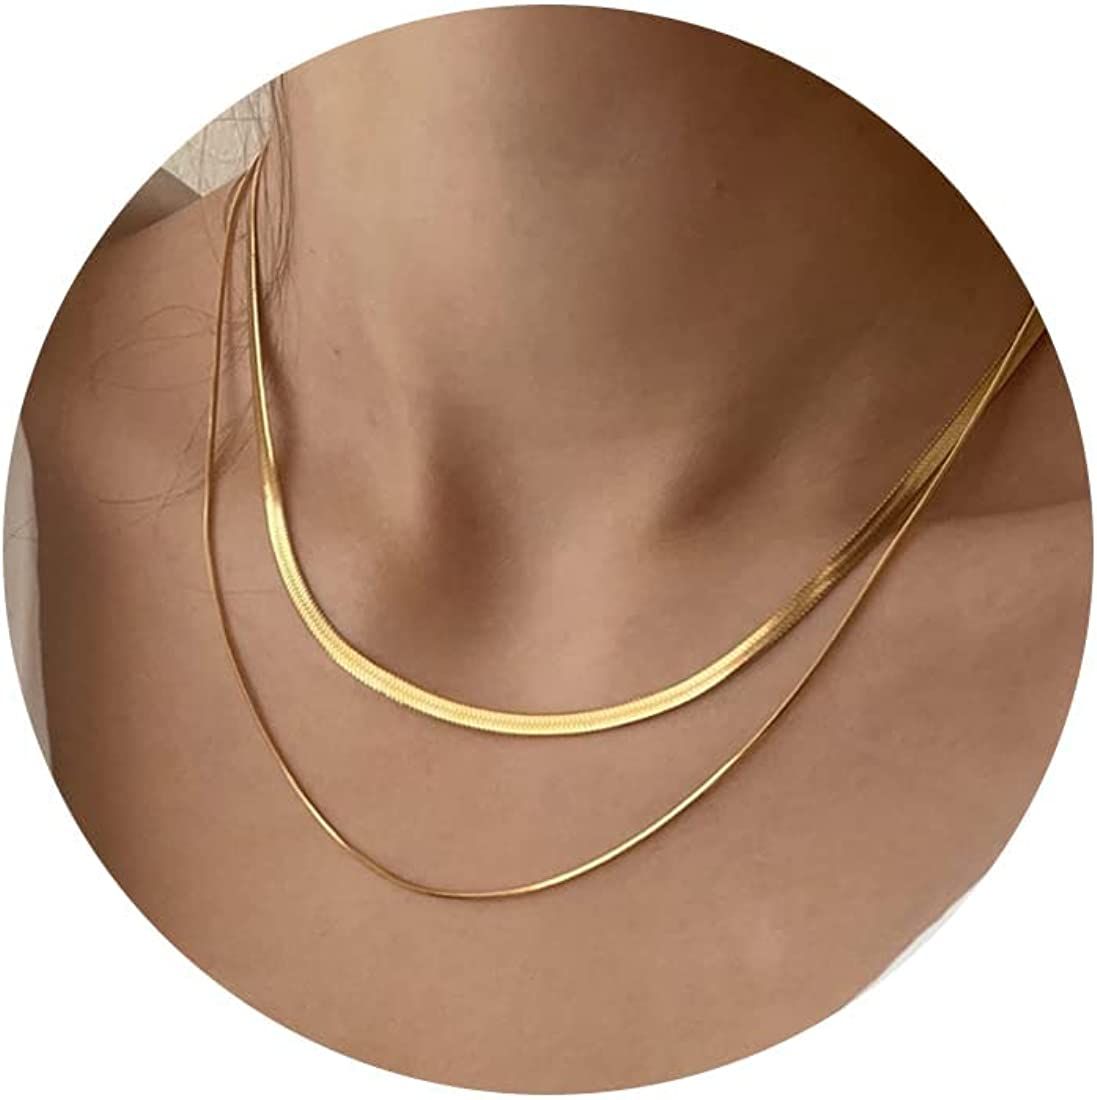 Amazon Jewelry / Amazon Jewlery / Amazon Gold Jewelry / Amazon Necklace / Amazon Gold Necklace | Amazon (US)